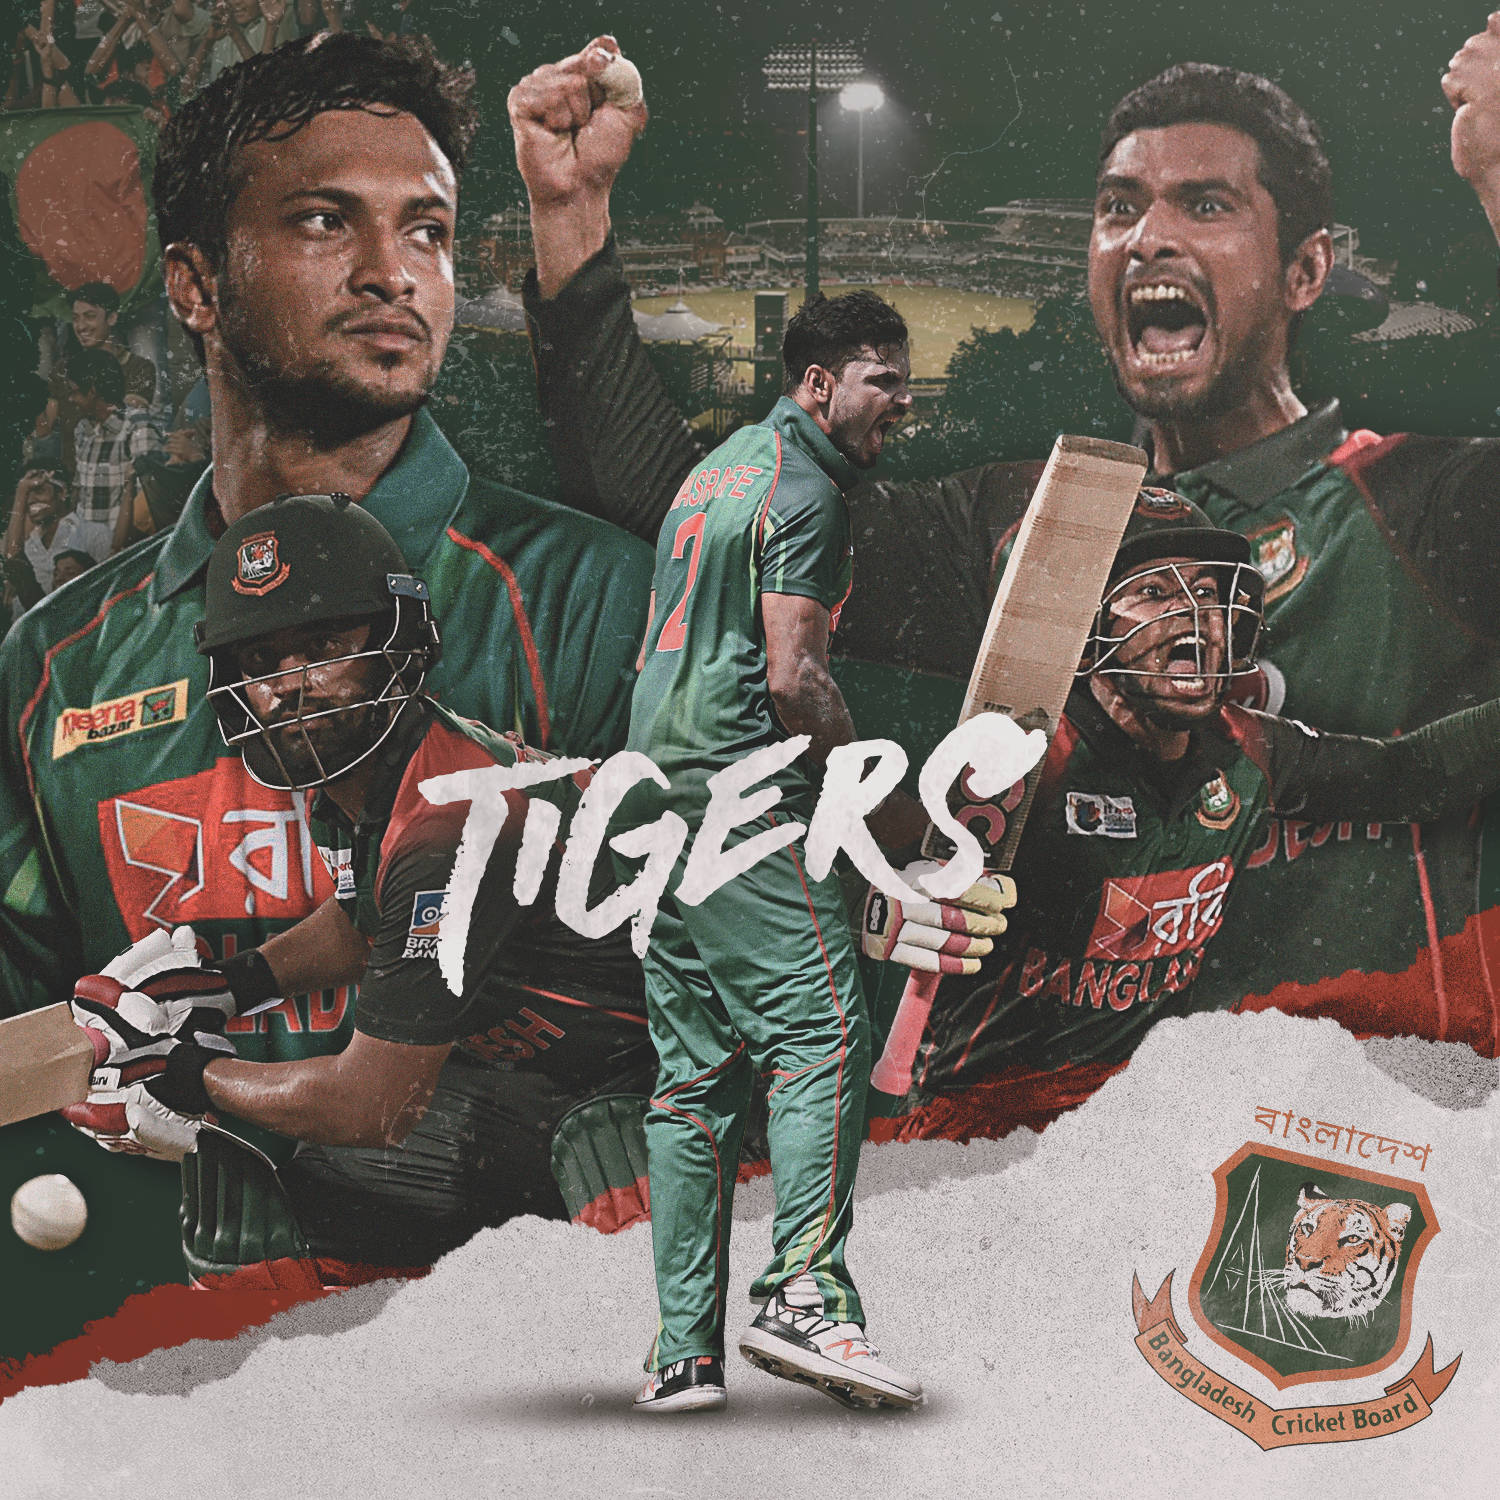 Bangladeshs crickethold Tigers plakat Wallpaper